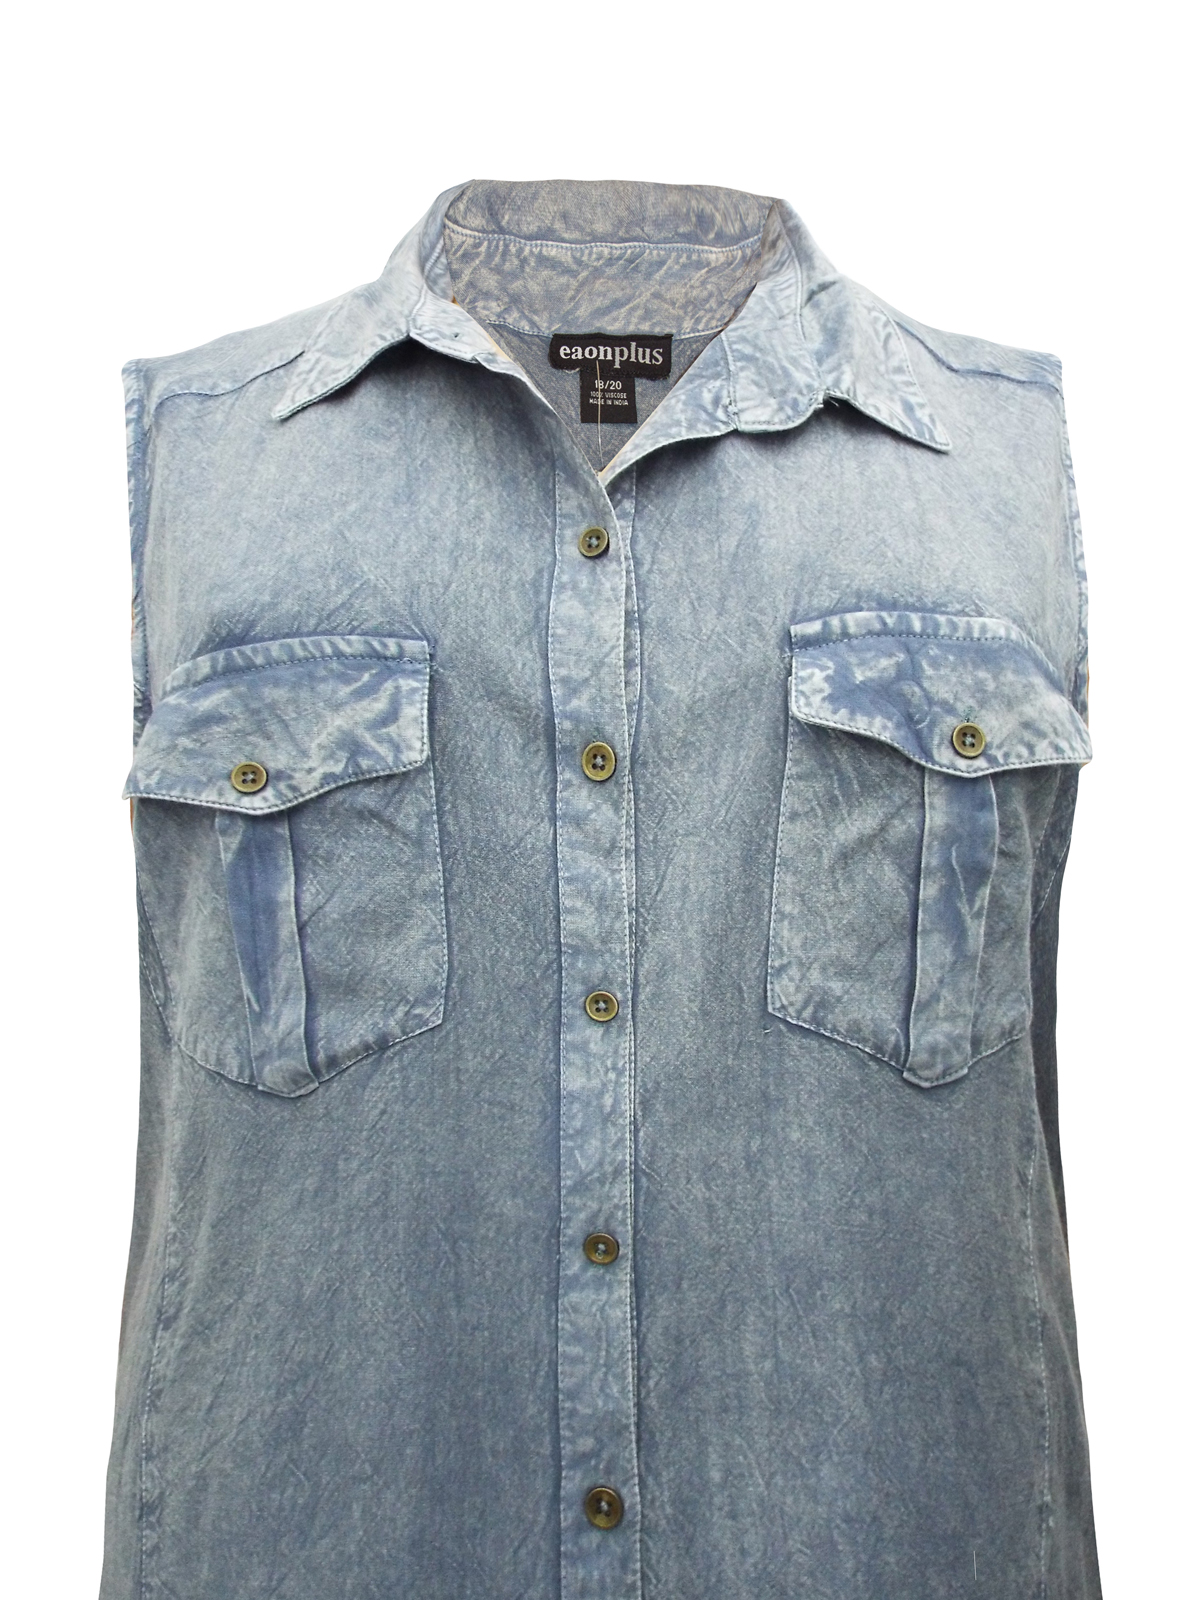 eaonplus DARK-GREY Sleeveless Collared Shirt Dress - Plus Size 18/20 to ...